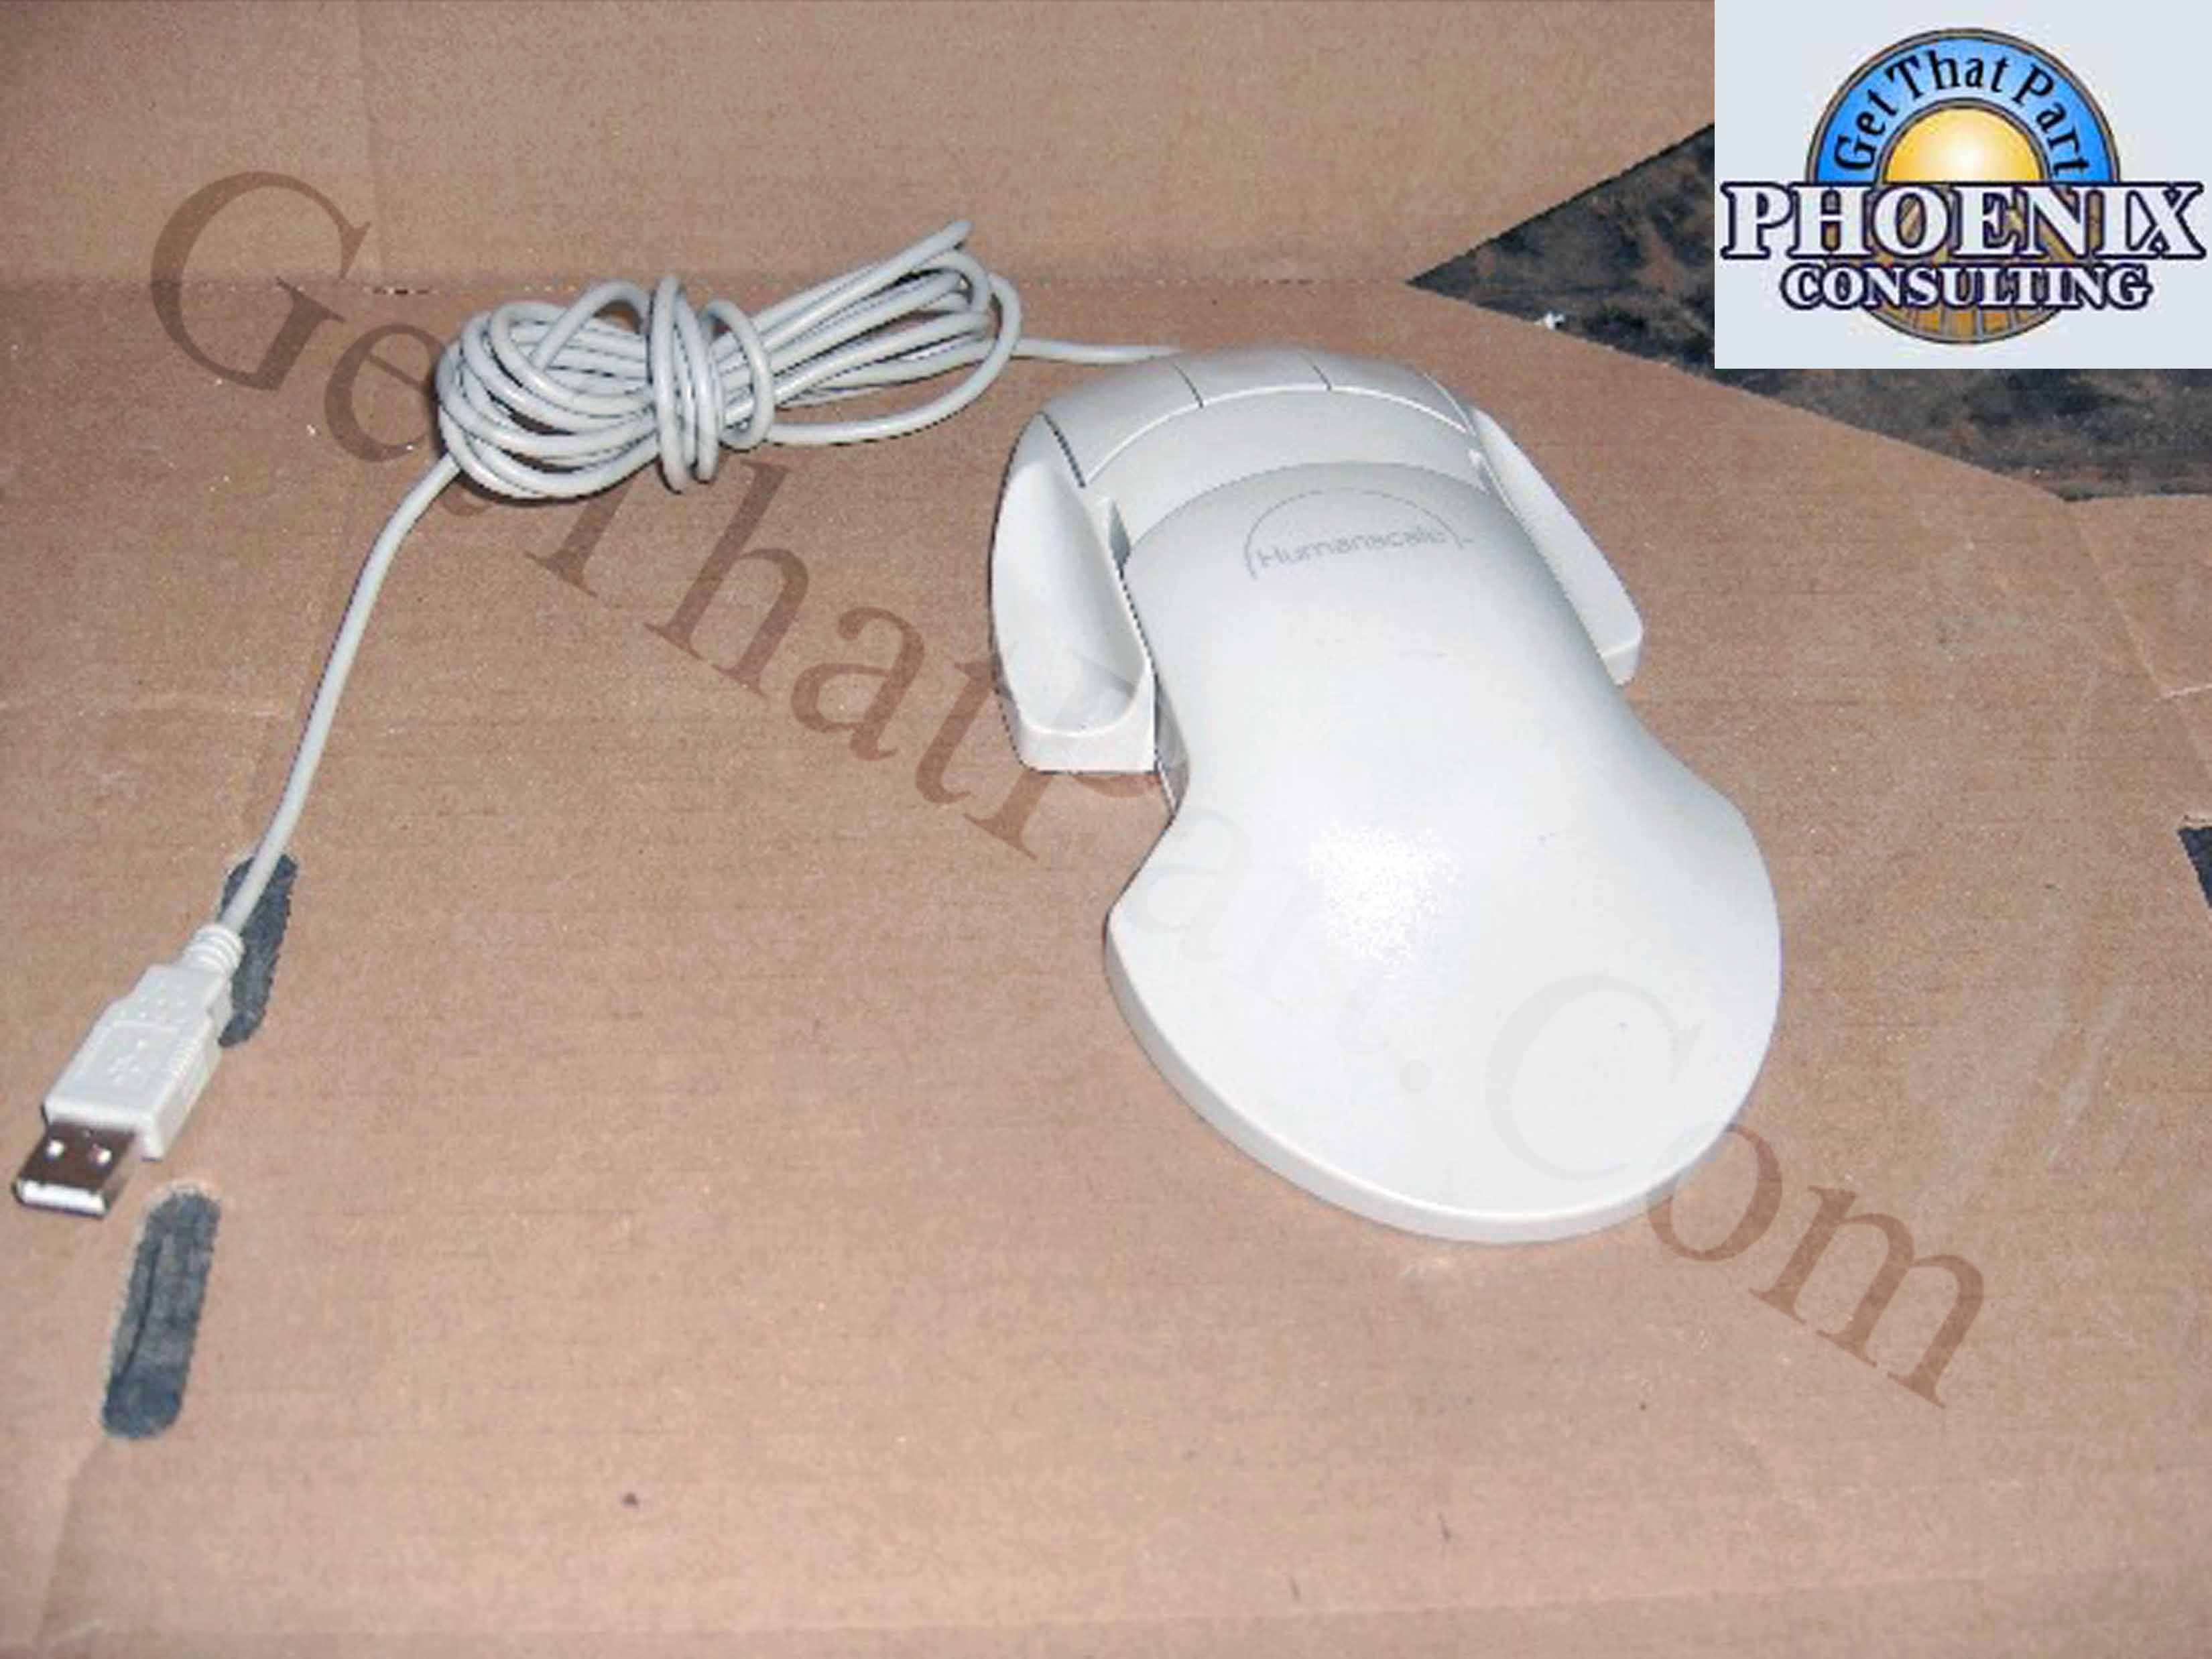 Humanscale Ergonomic Adjustable USB Whale Mouse